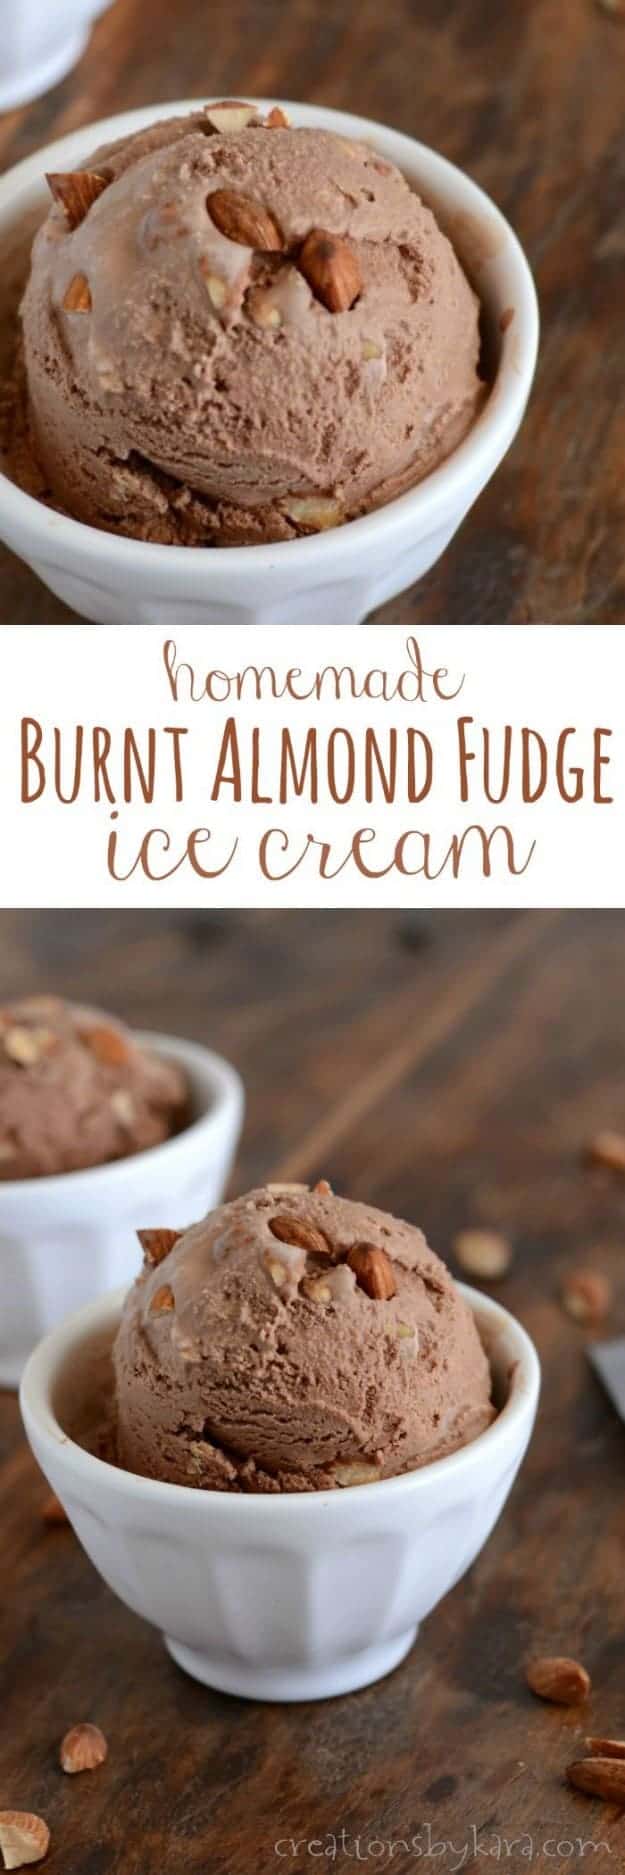 Homemade Burnt Almond Fudge Ice Cream